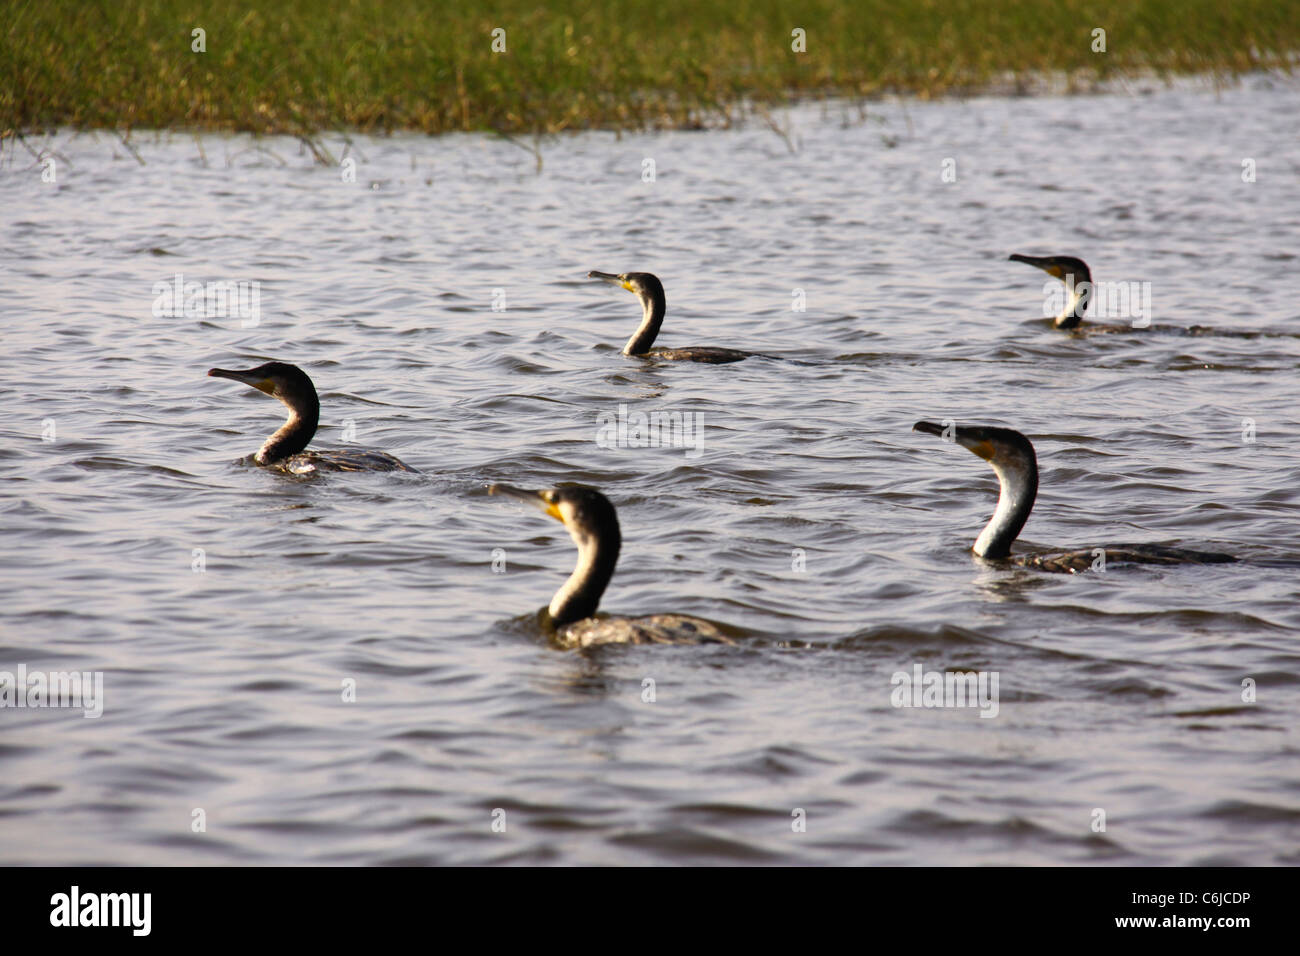 White breasted cormorants swimming in a river Stock Photo